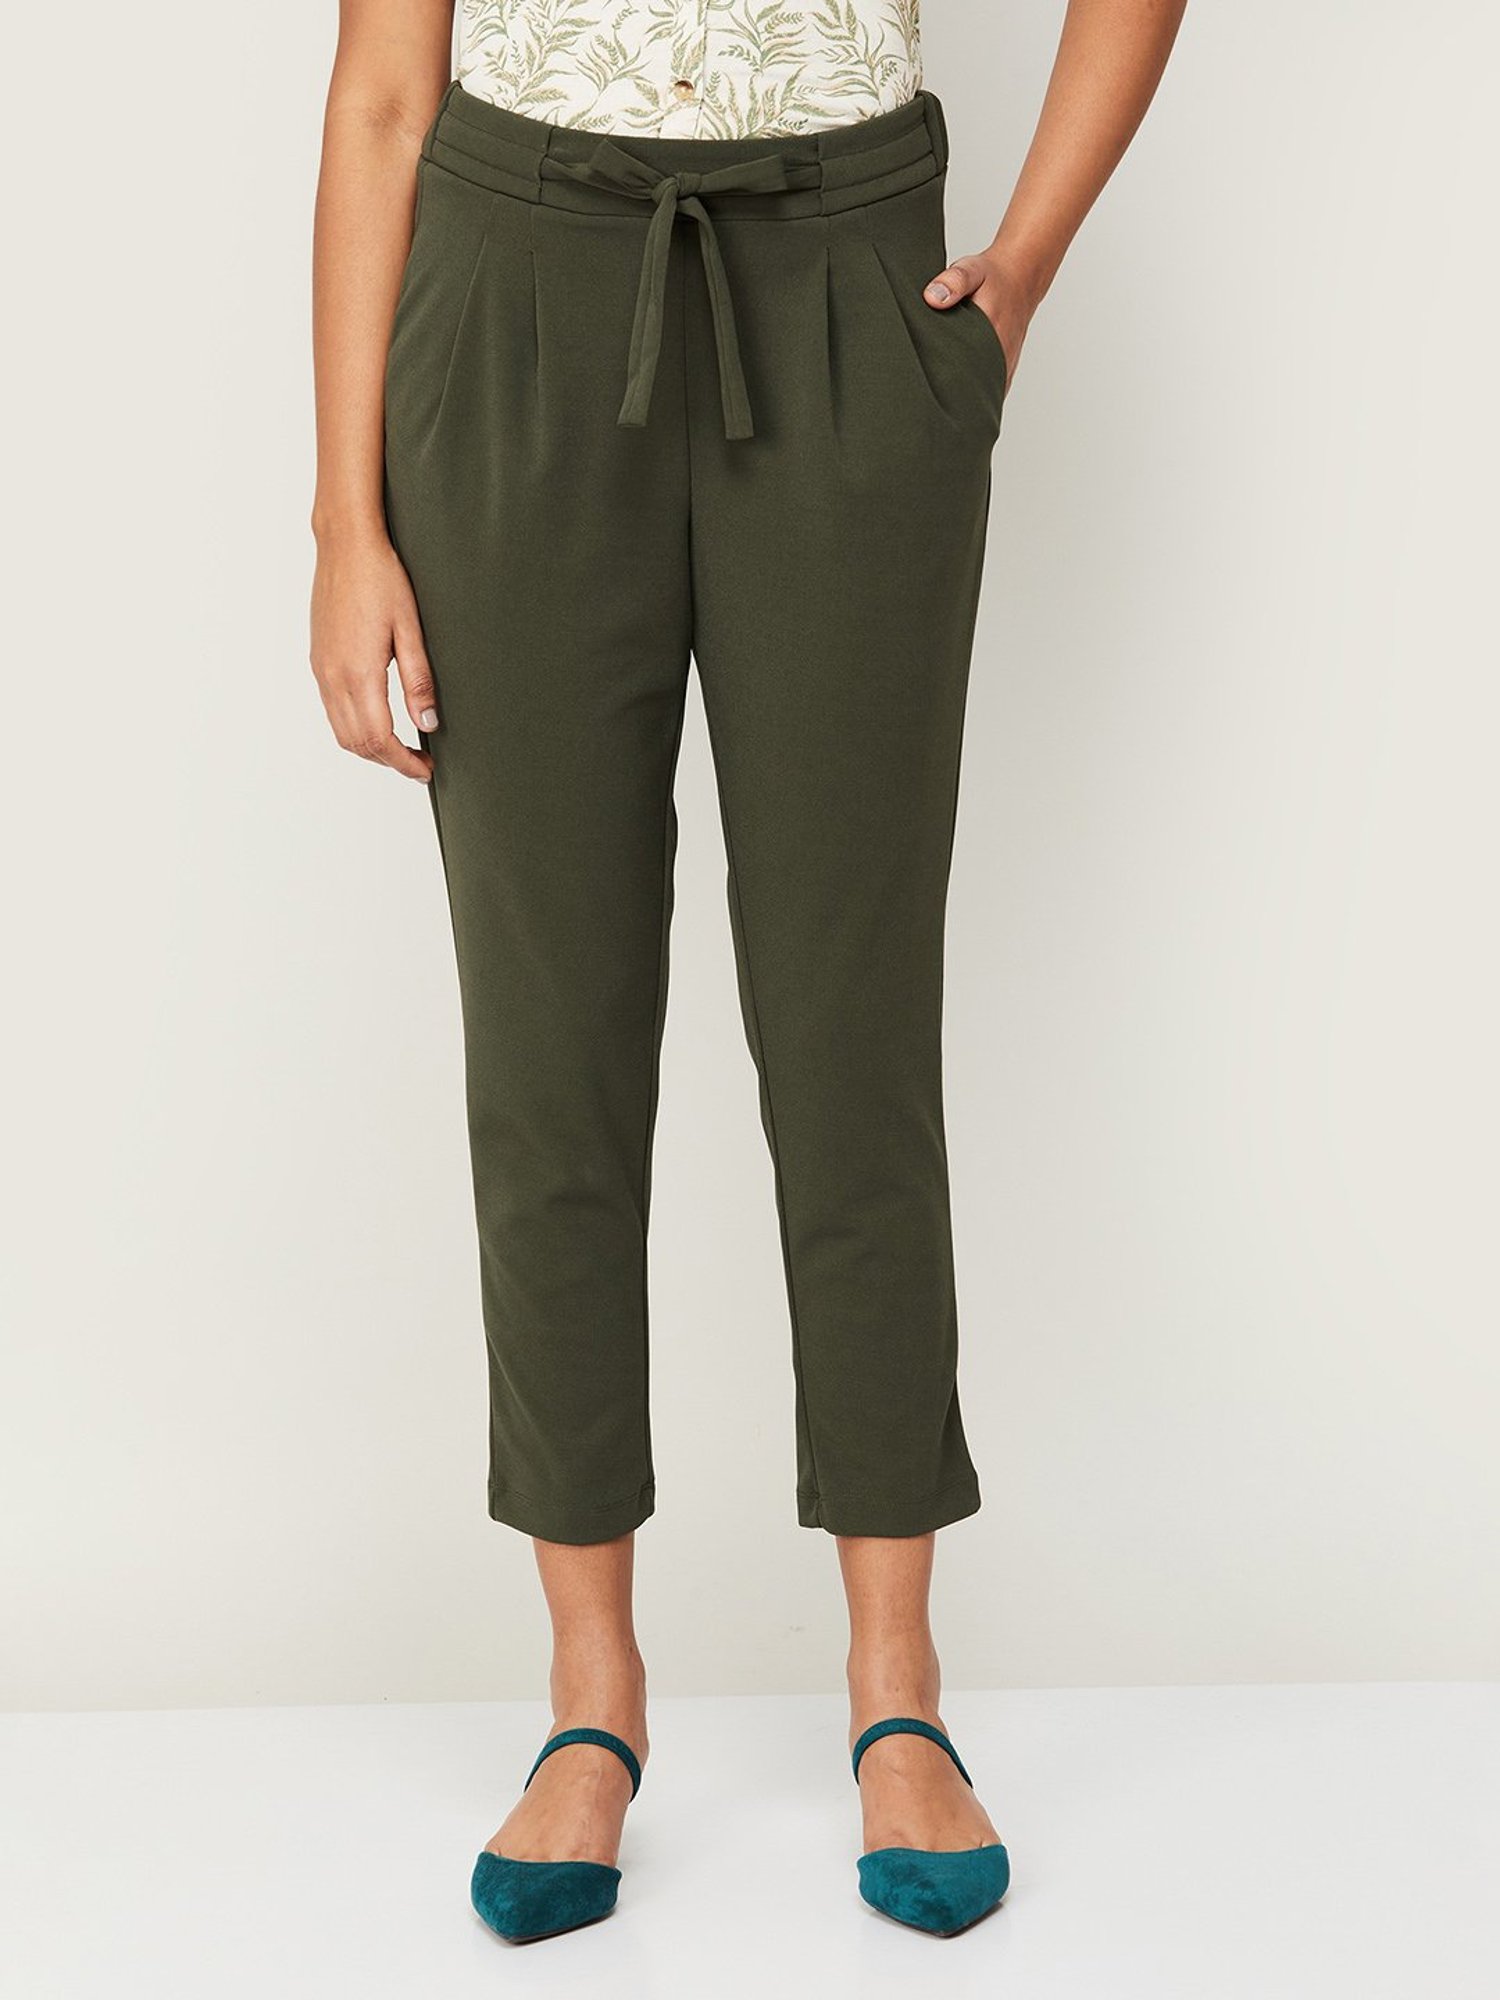 Women's Jeans Jeggings Five Pocket Stretch Denim Pants (Olive Green -  Medium) - Walmart.com